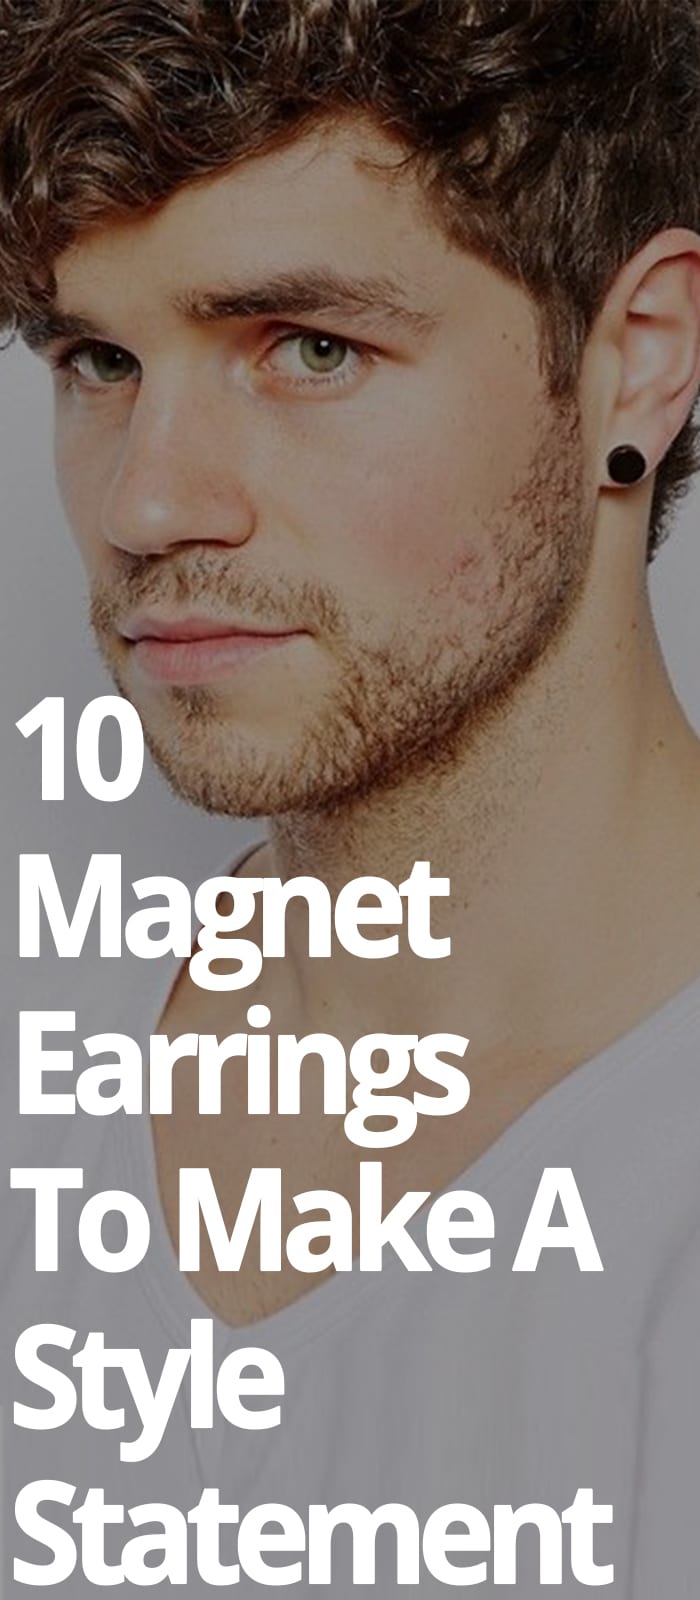 10 MAGNET EARRINGS